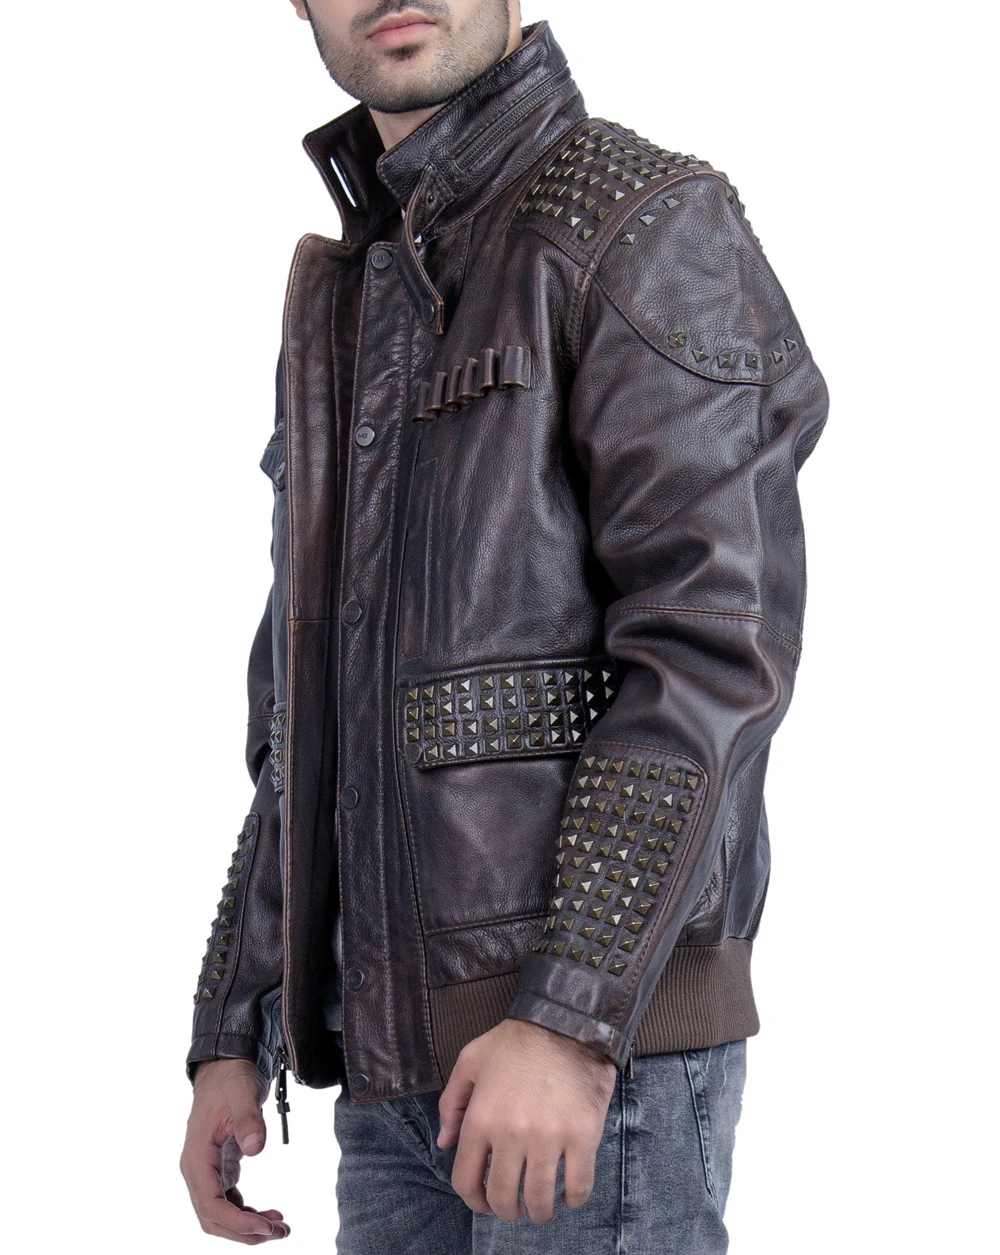 Buy Metal Stud Leather Jacket